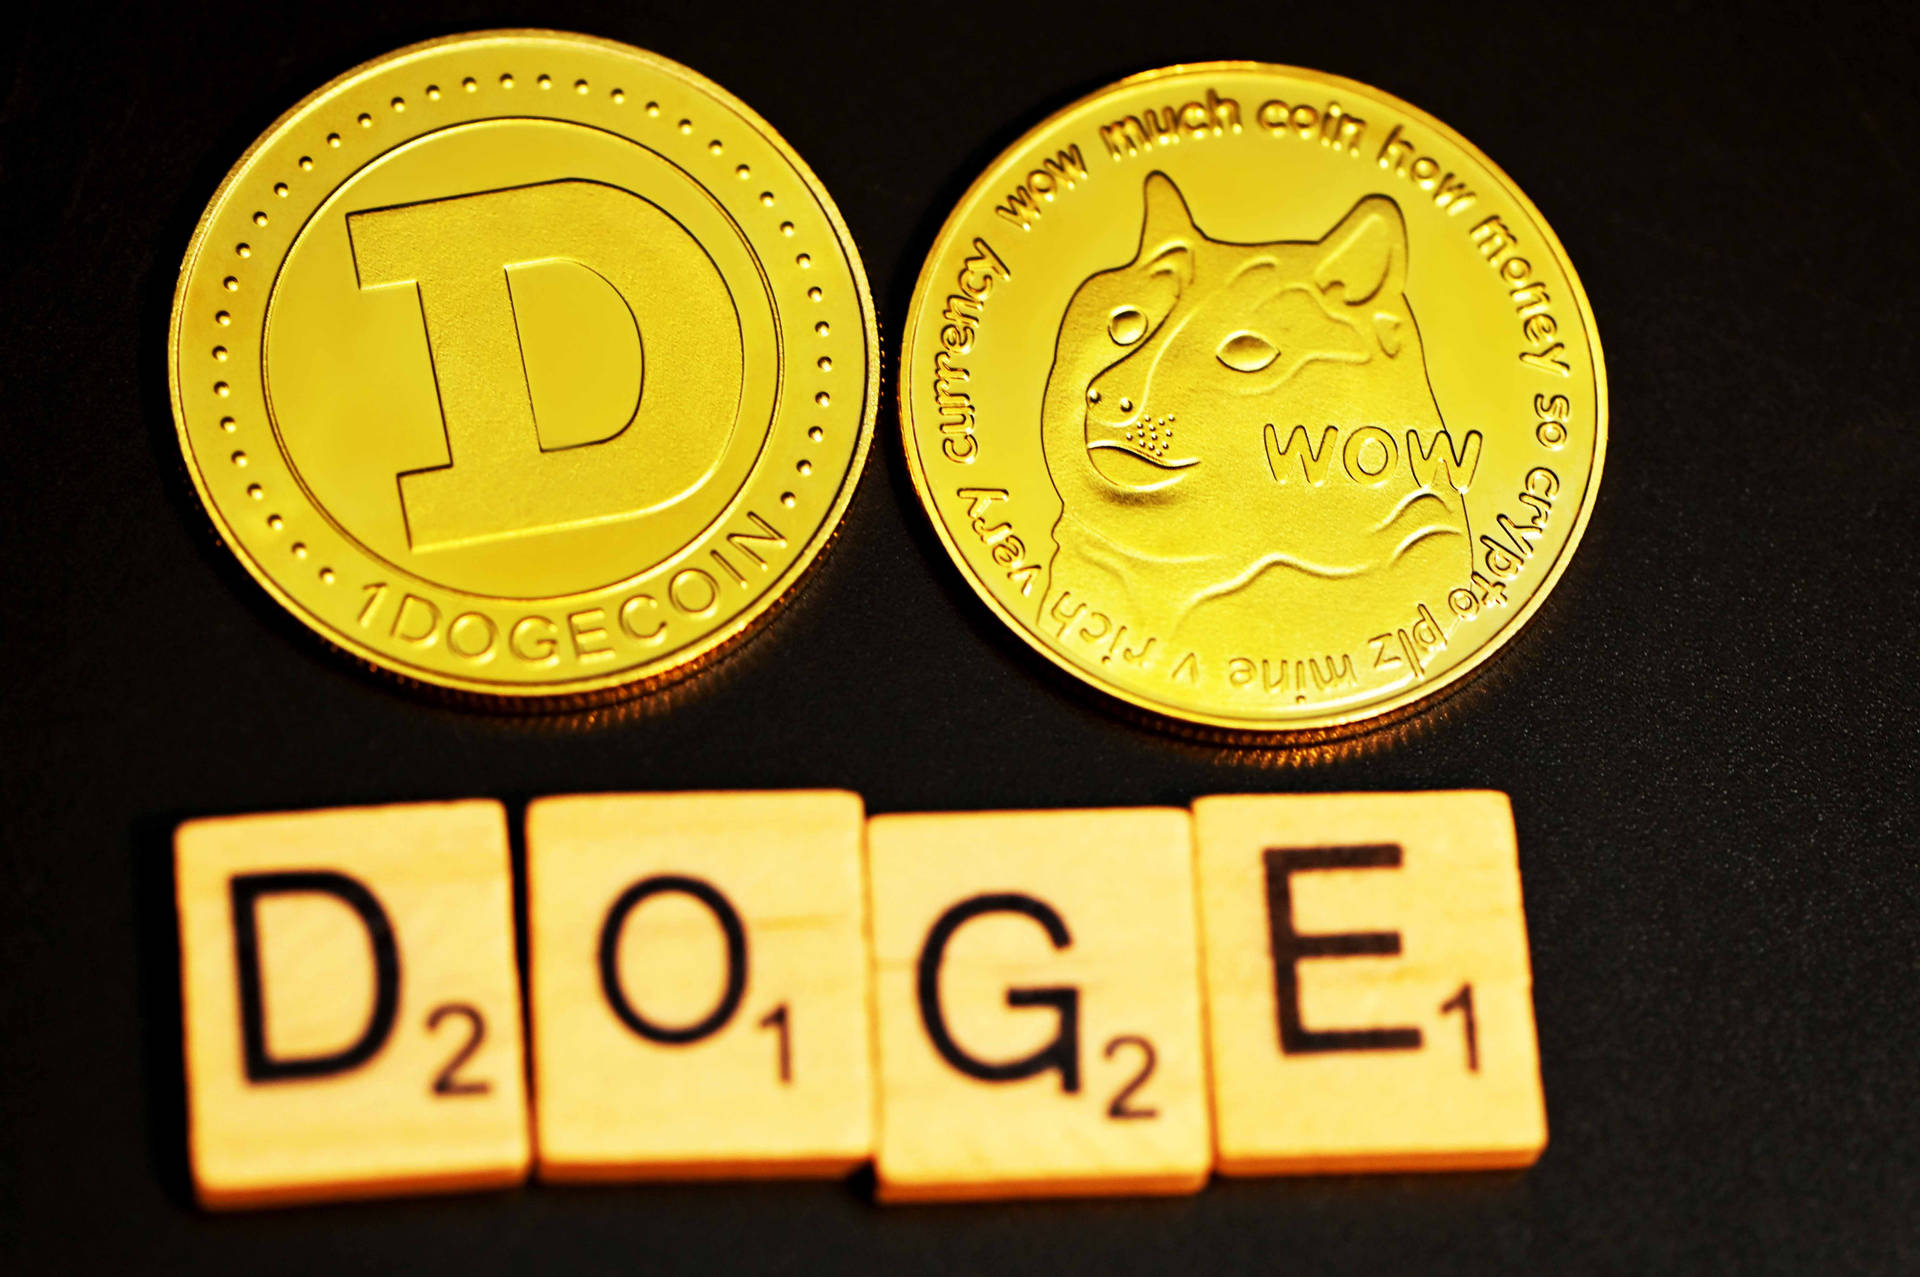 Dogecoin Scrabble Tiles Background